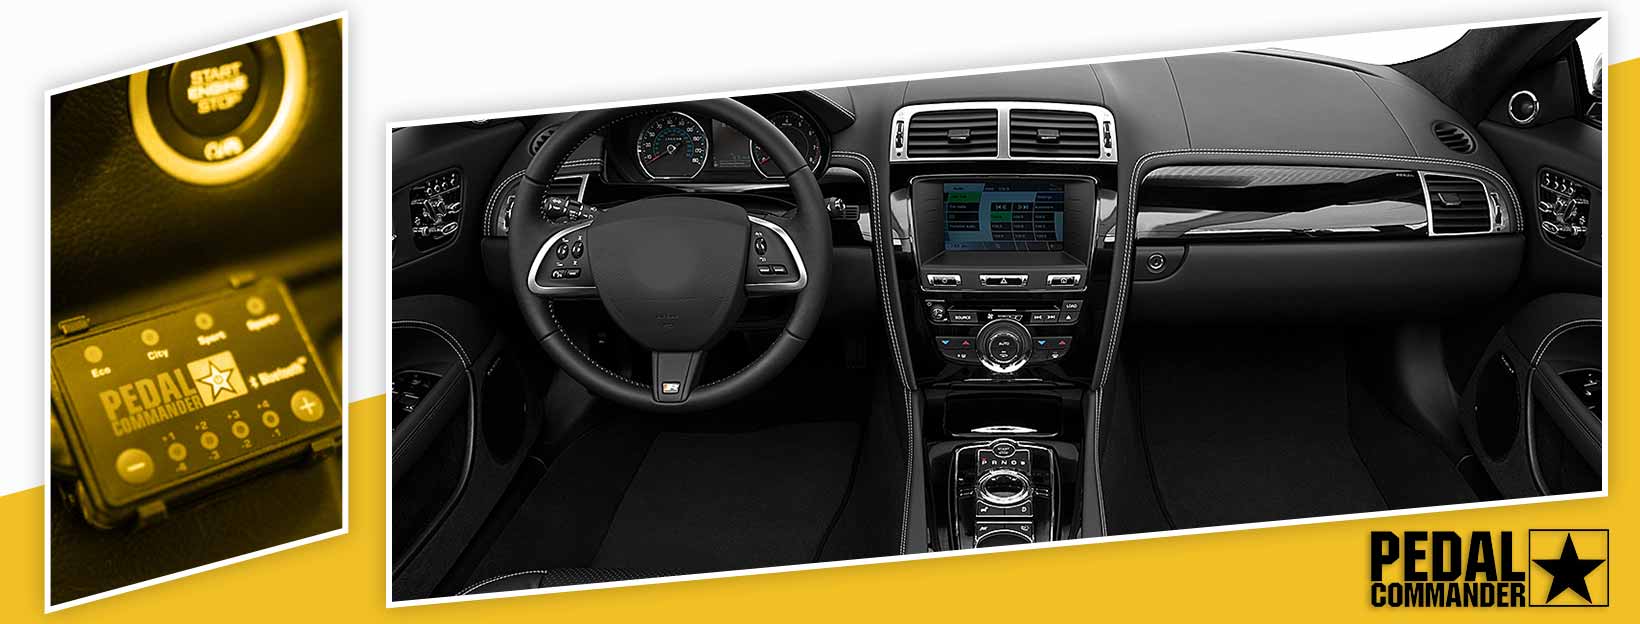 Pedal Commander for Jaguar XK - interior